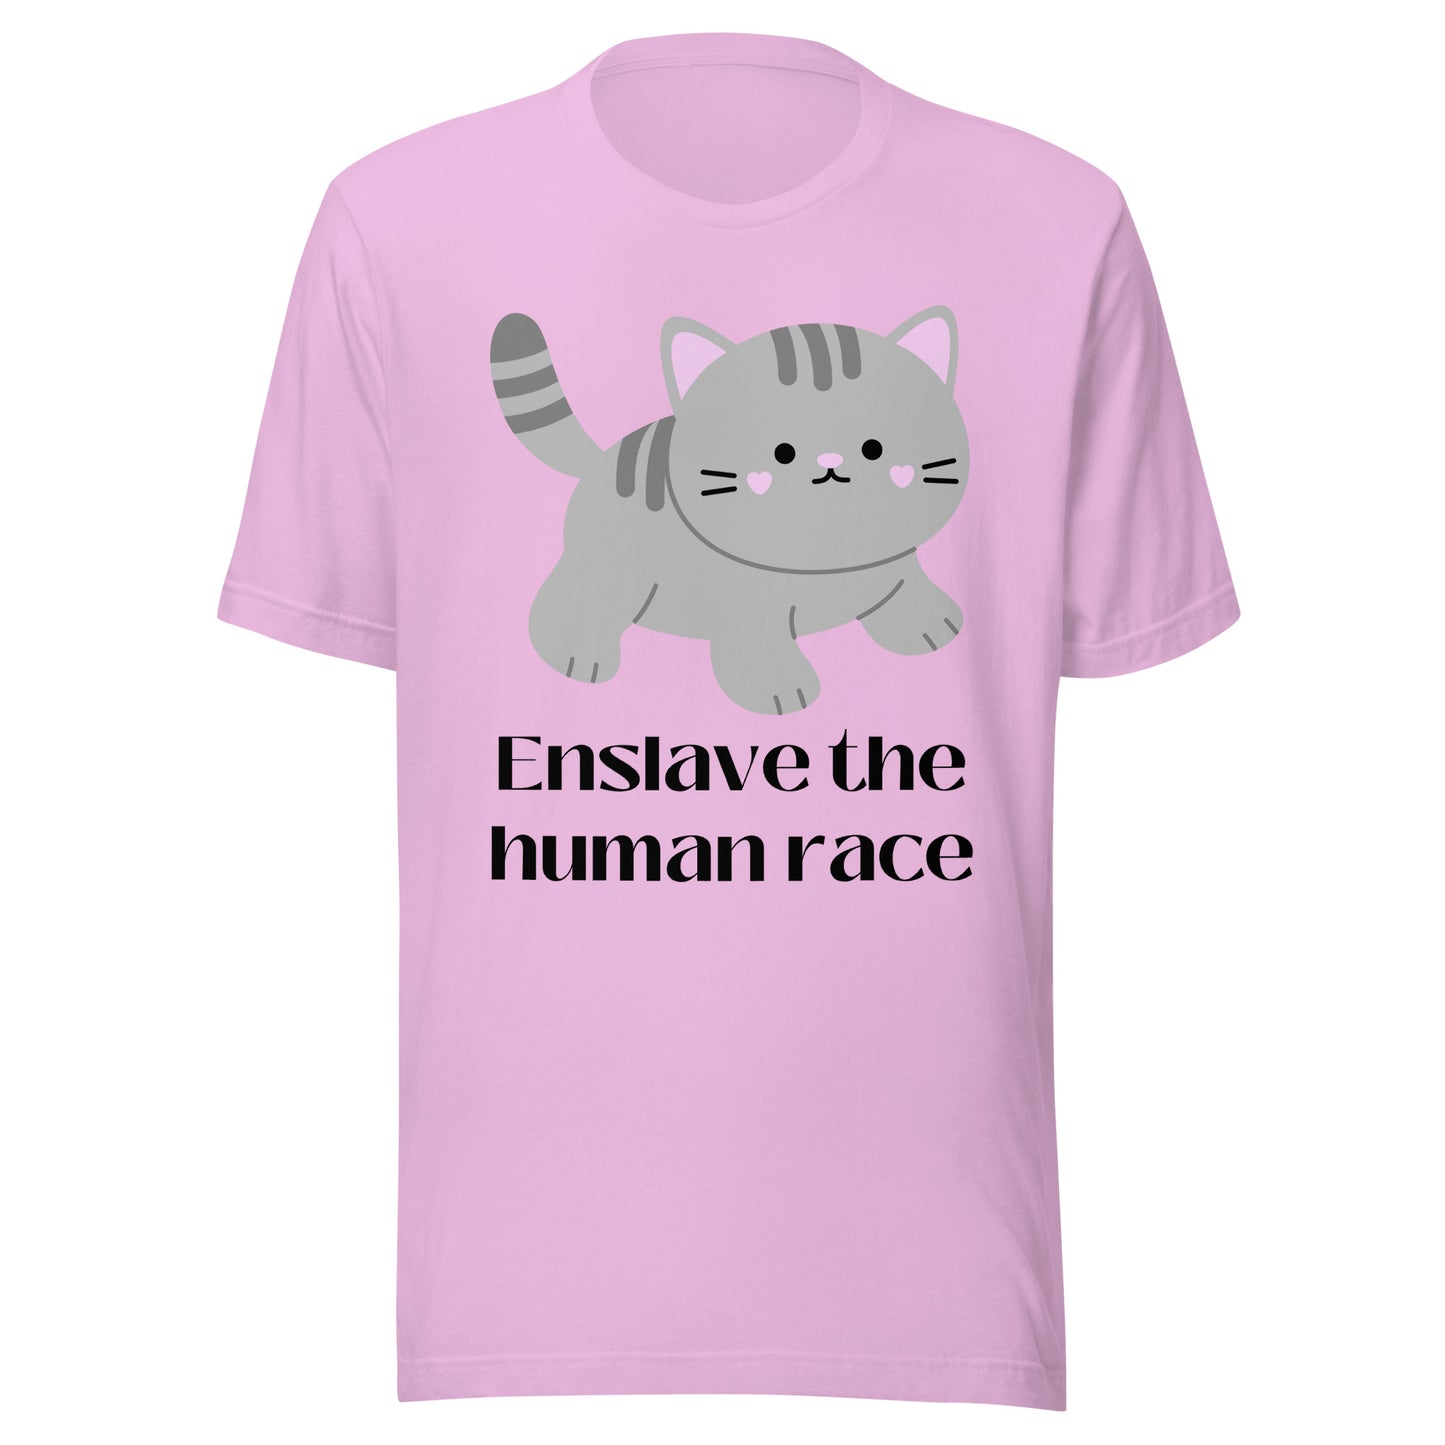 "Enslave the human race" - Unisex t-shirt